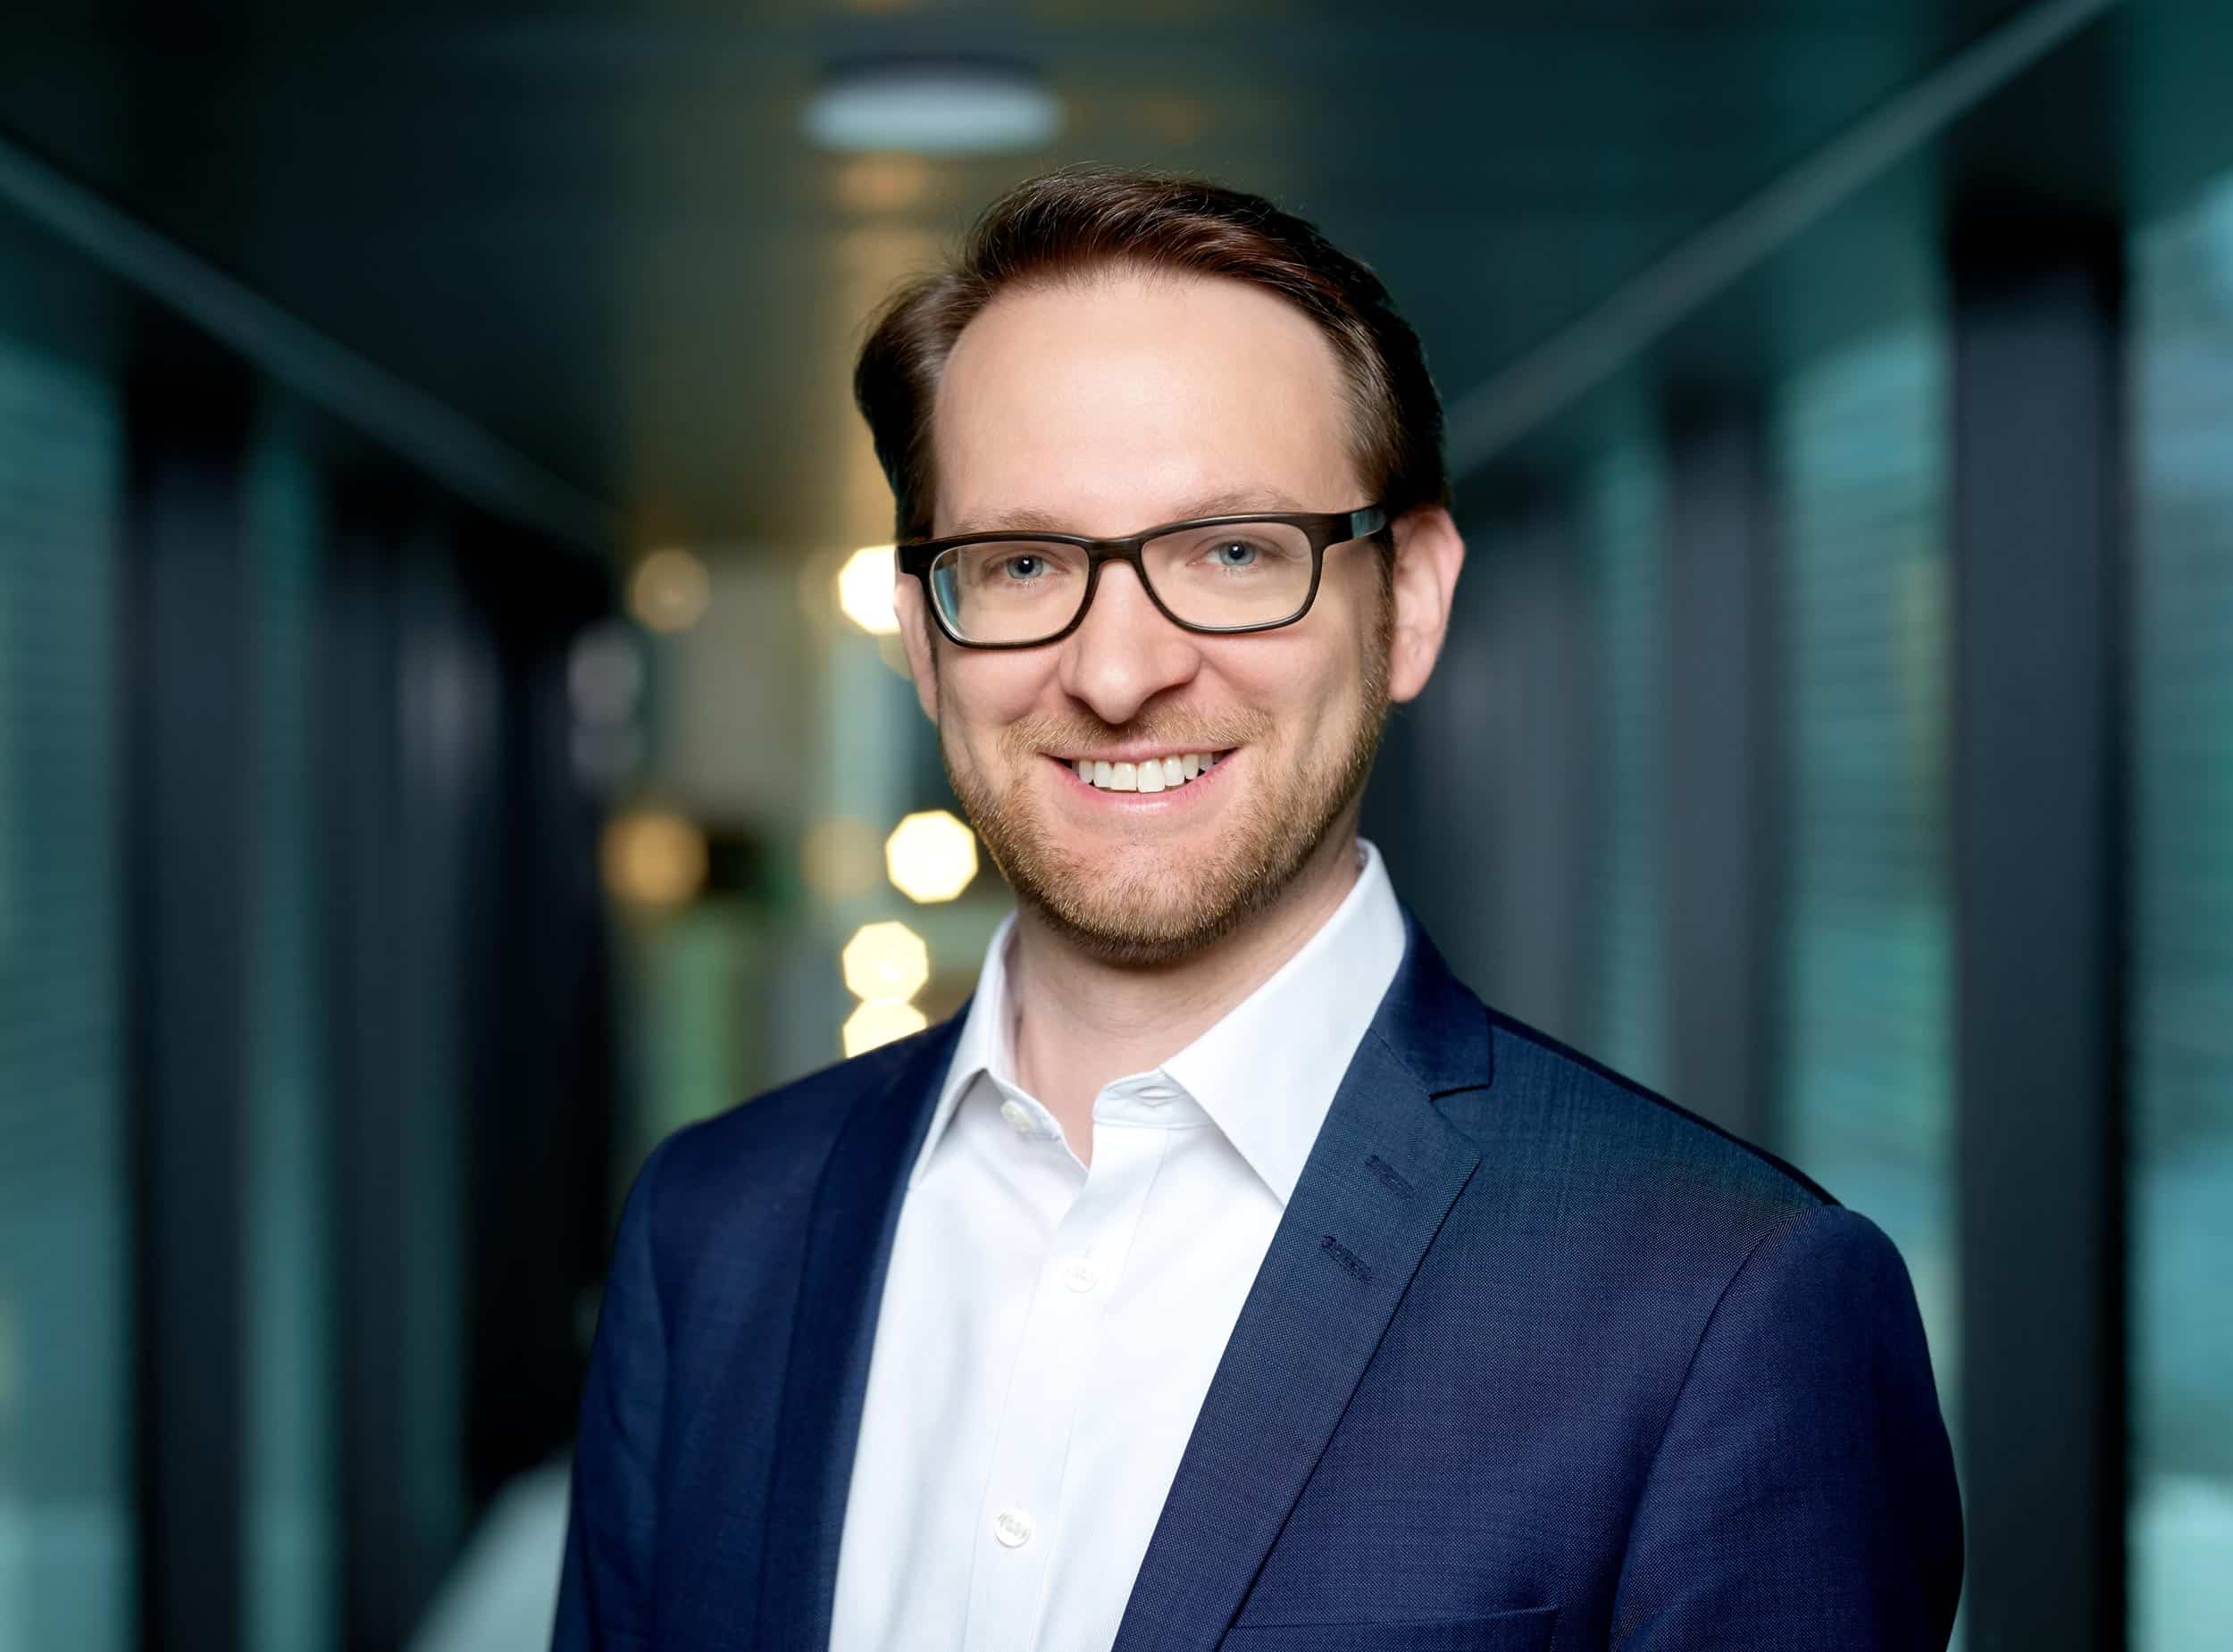 SAP Executive Board Member Thomas Saueressig